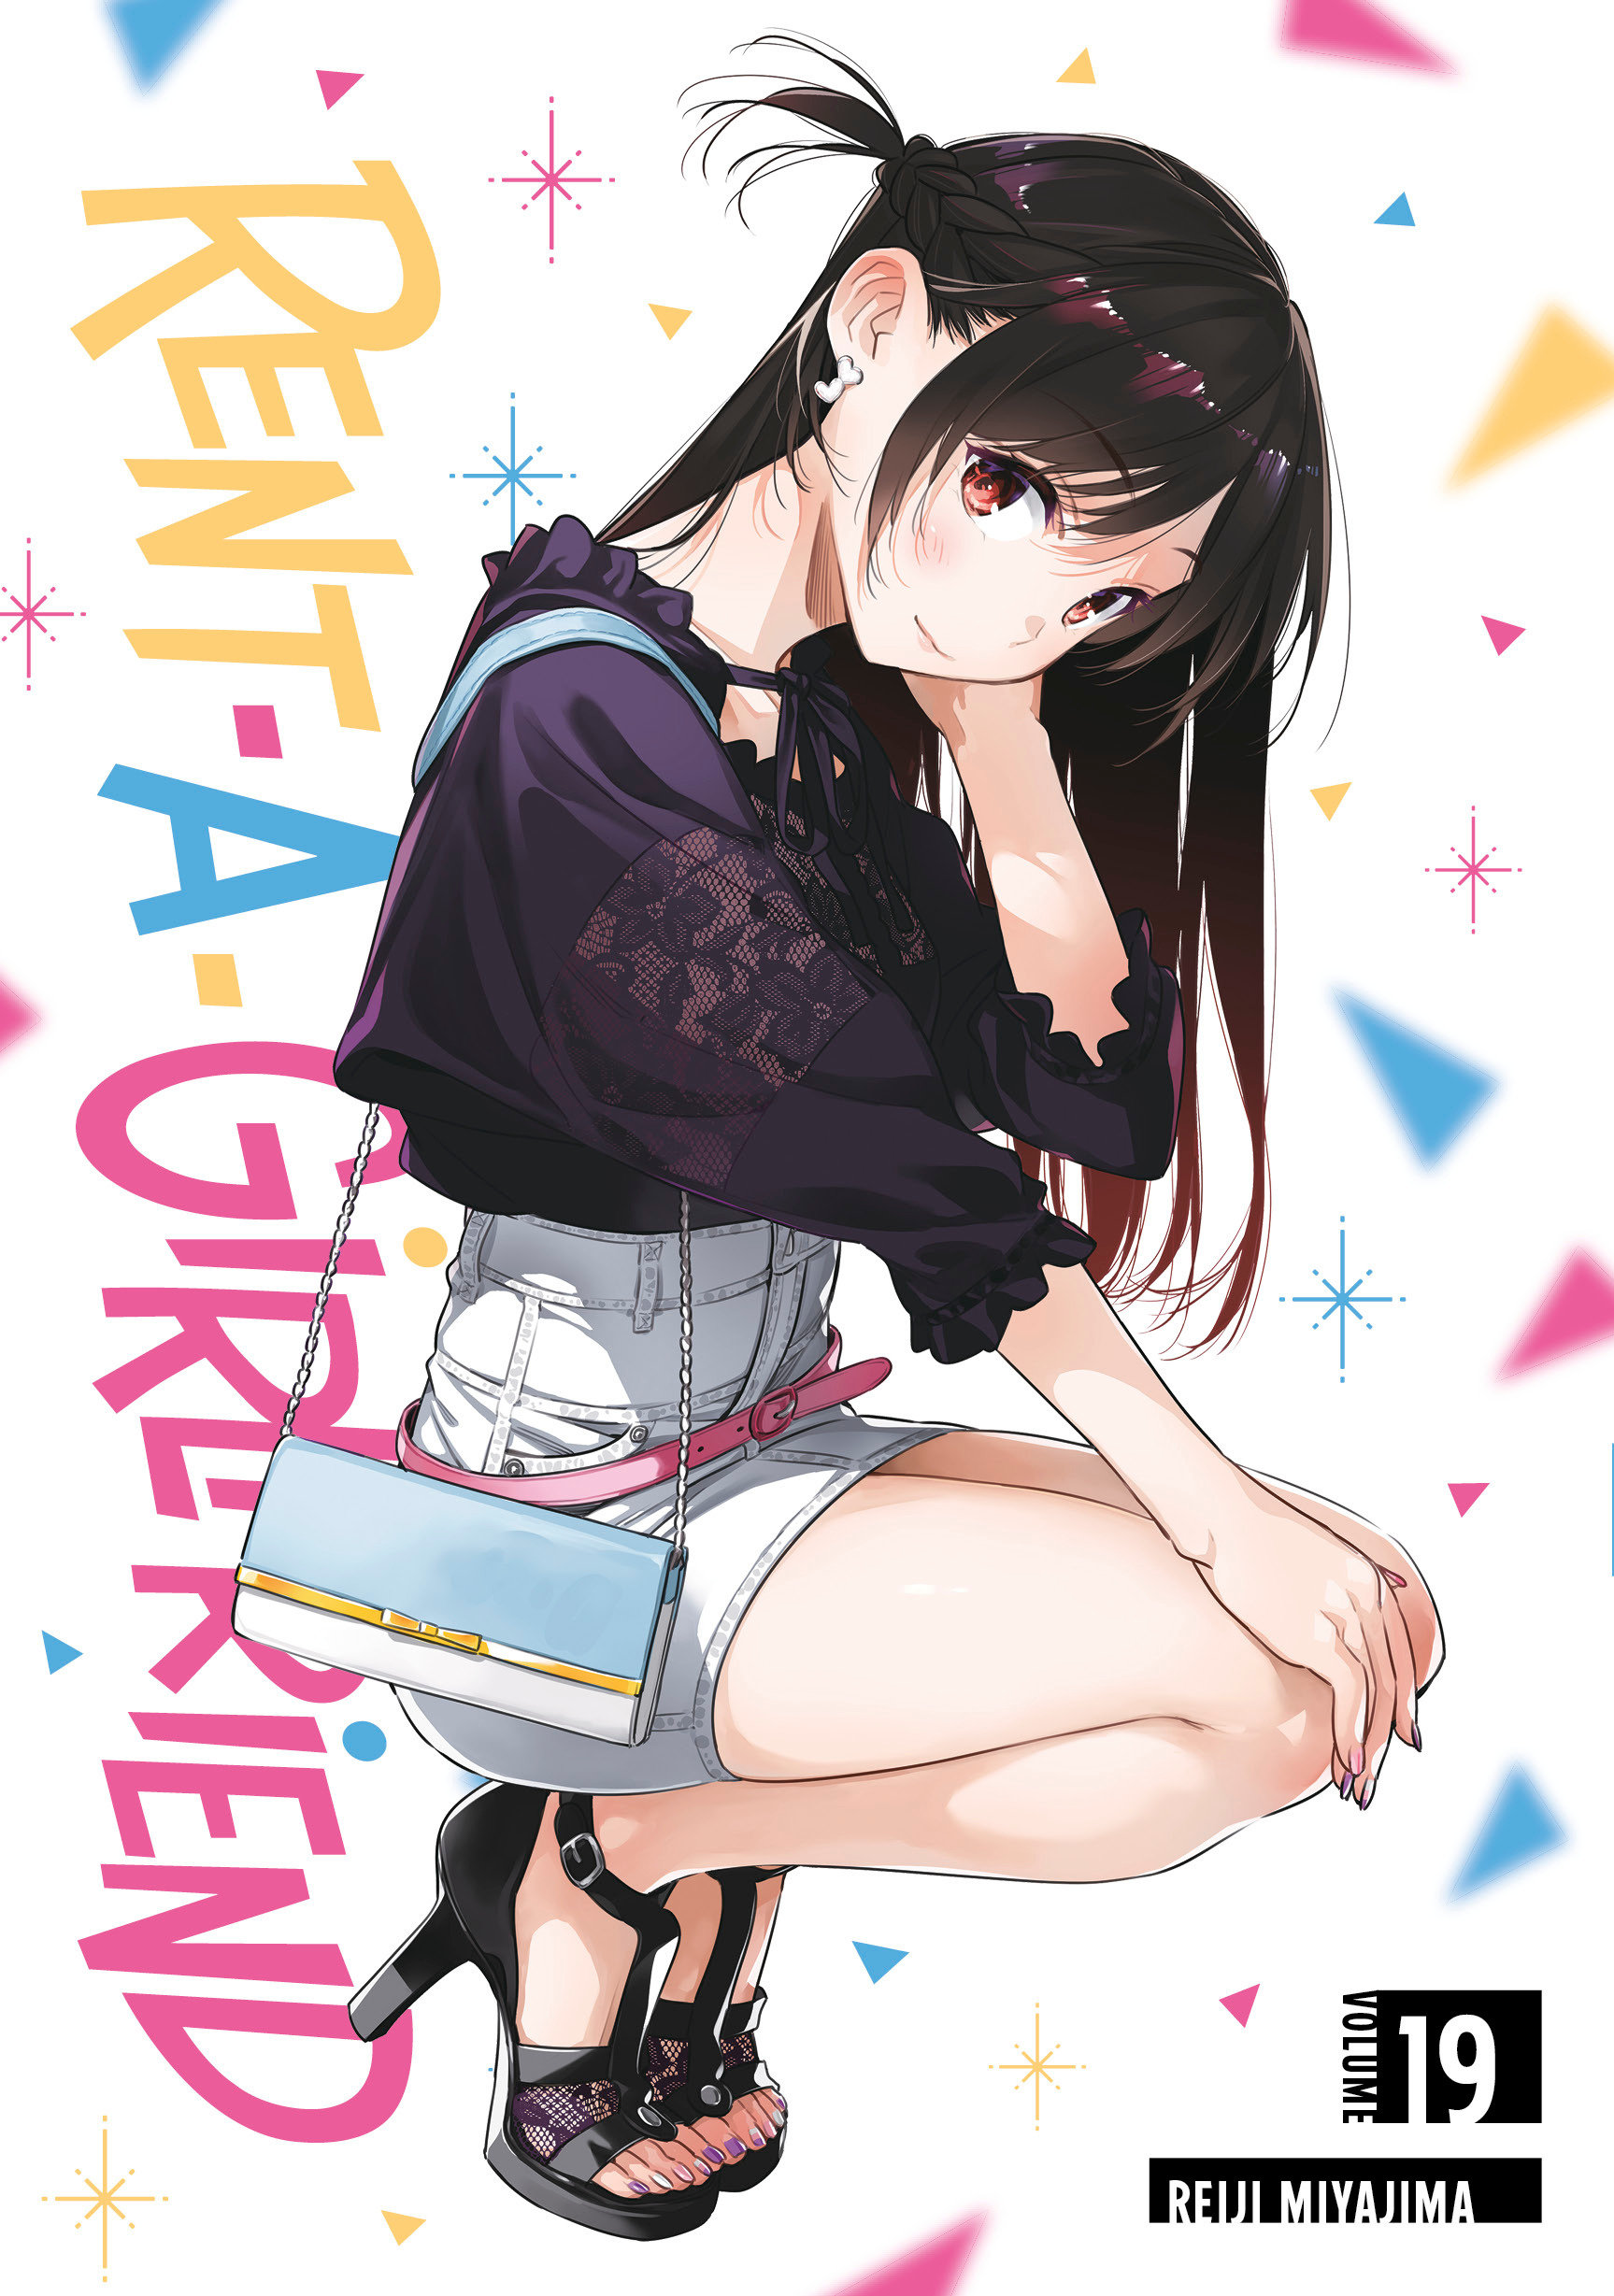 Rent-A-Girlfriend Manga Volume 19 (Mature)